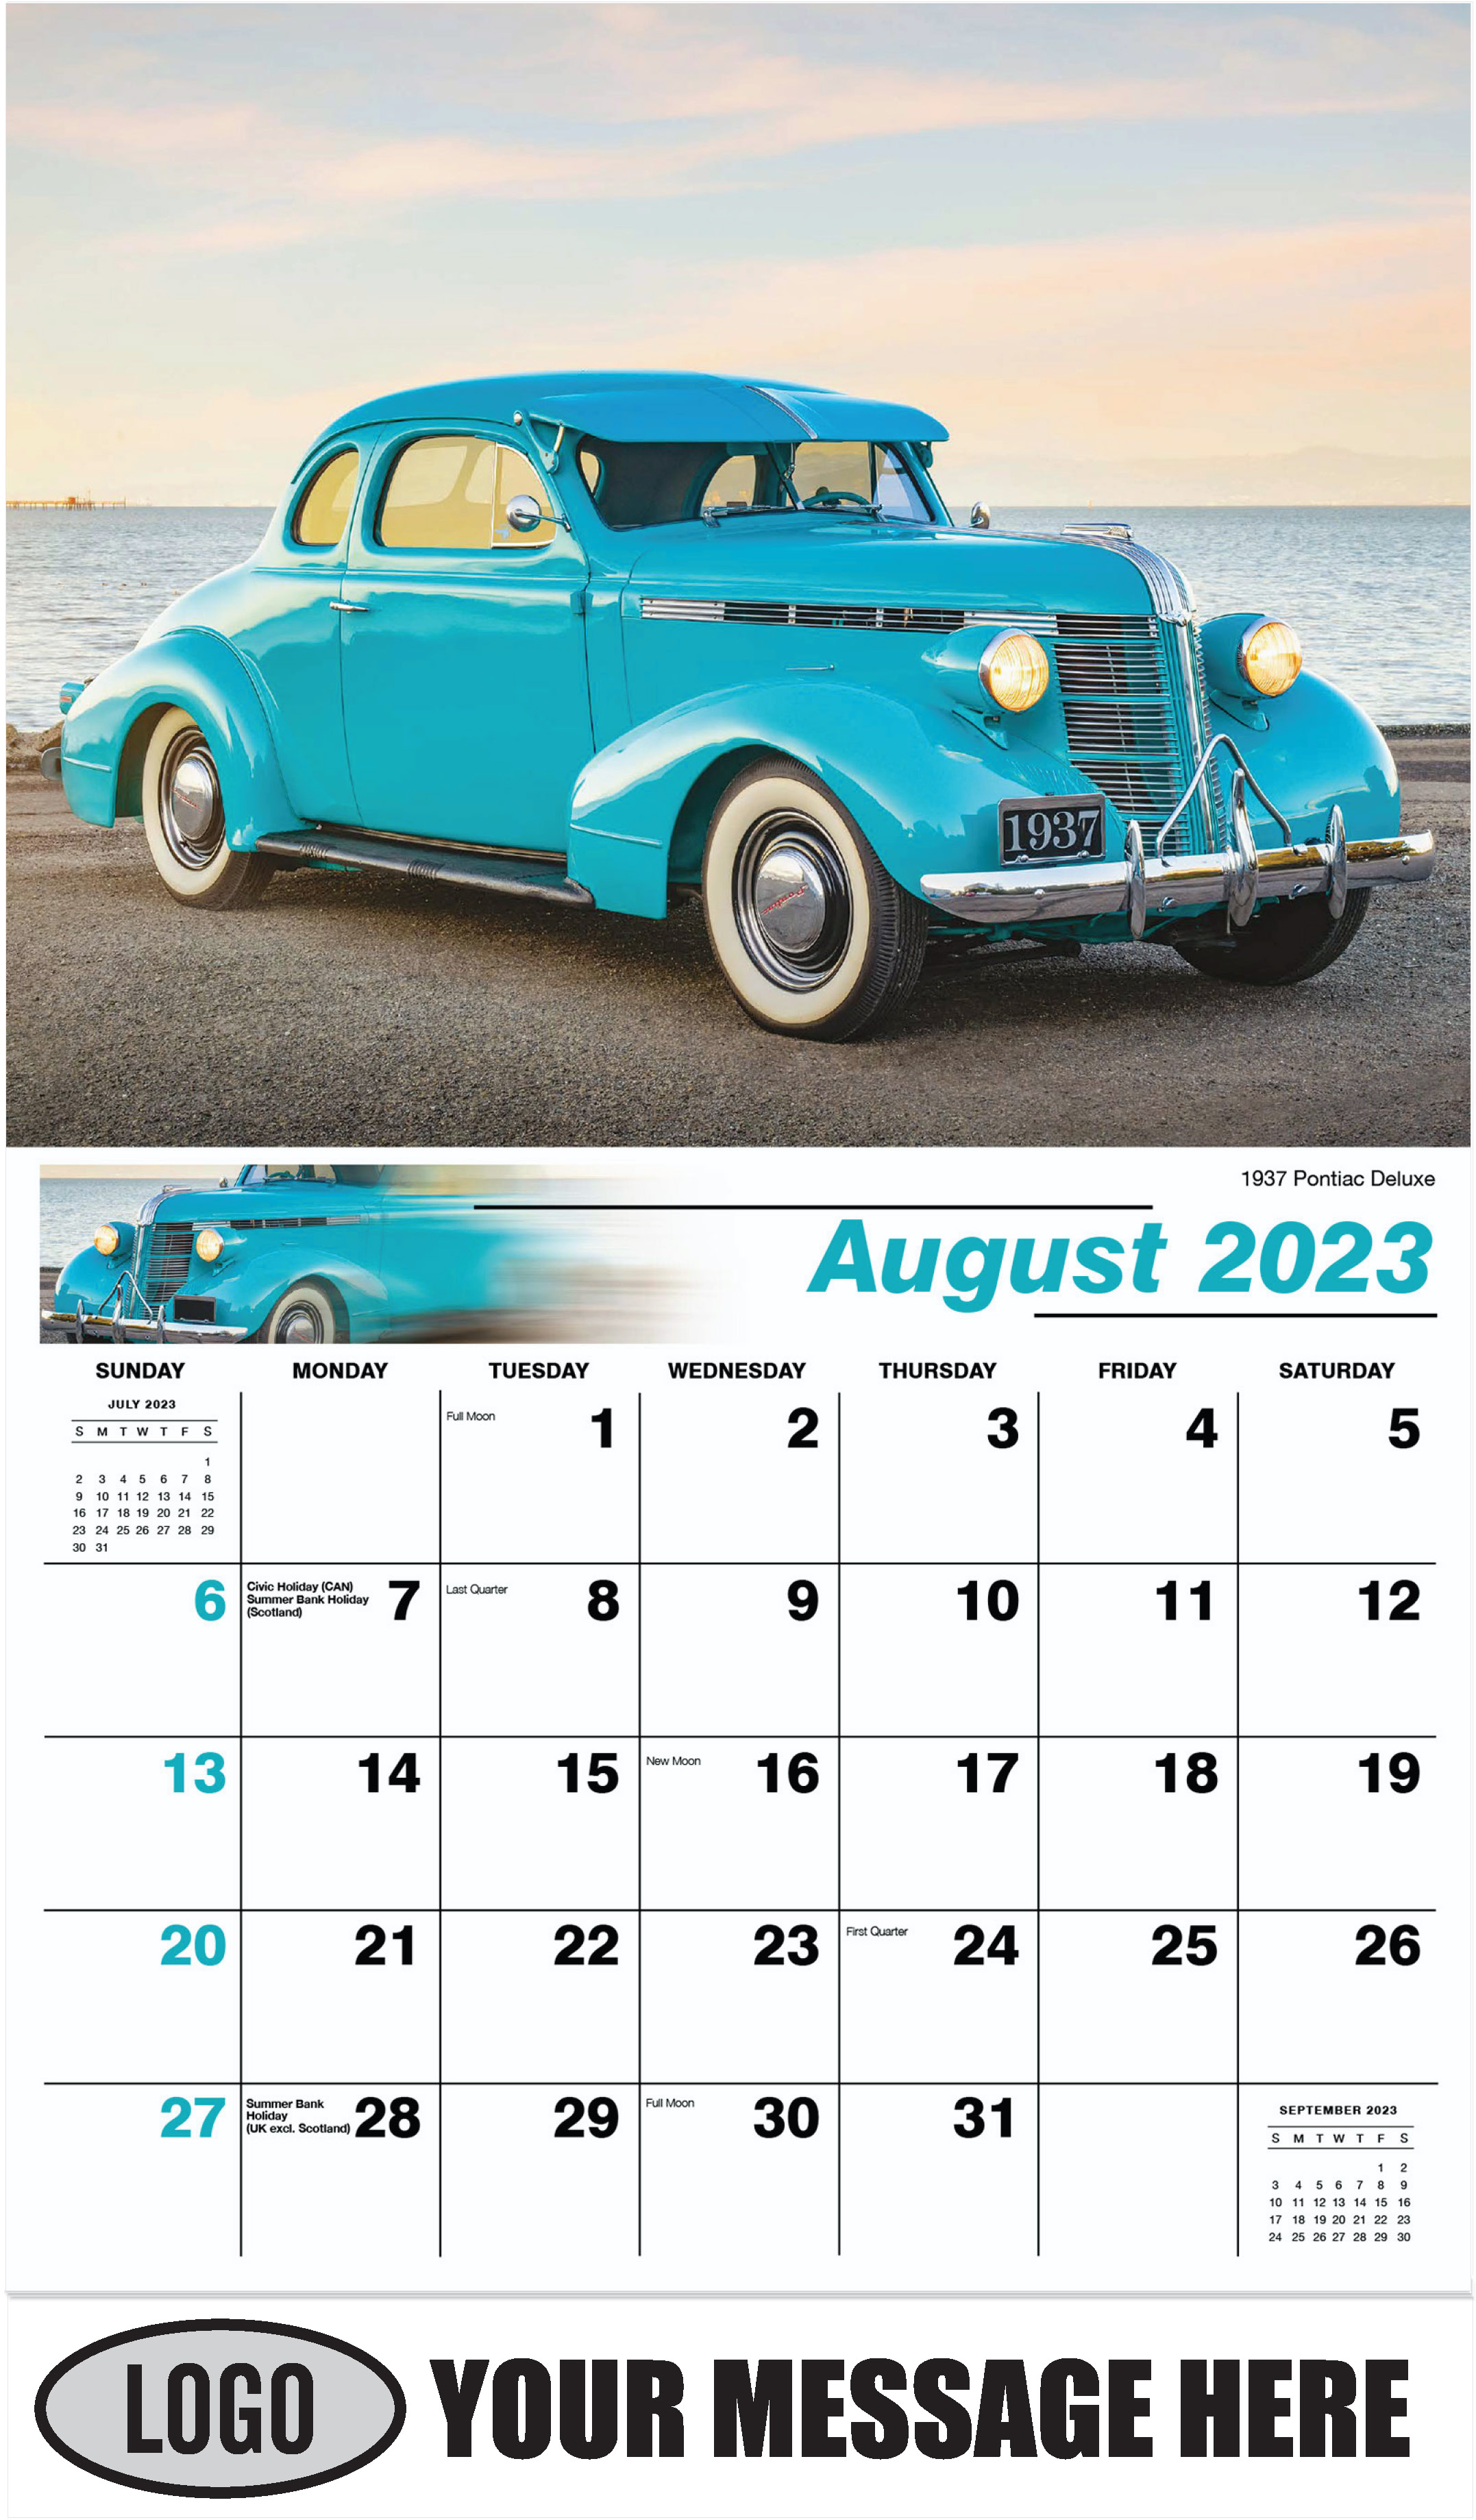 1937 Pontiac Deluxe - August - GM Classics 2023 Promotional Calendar